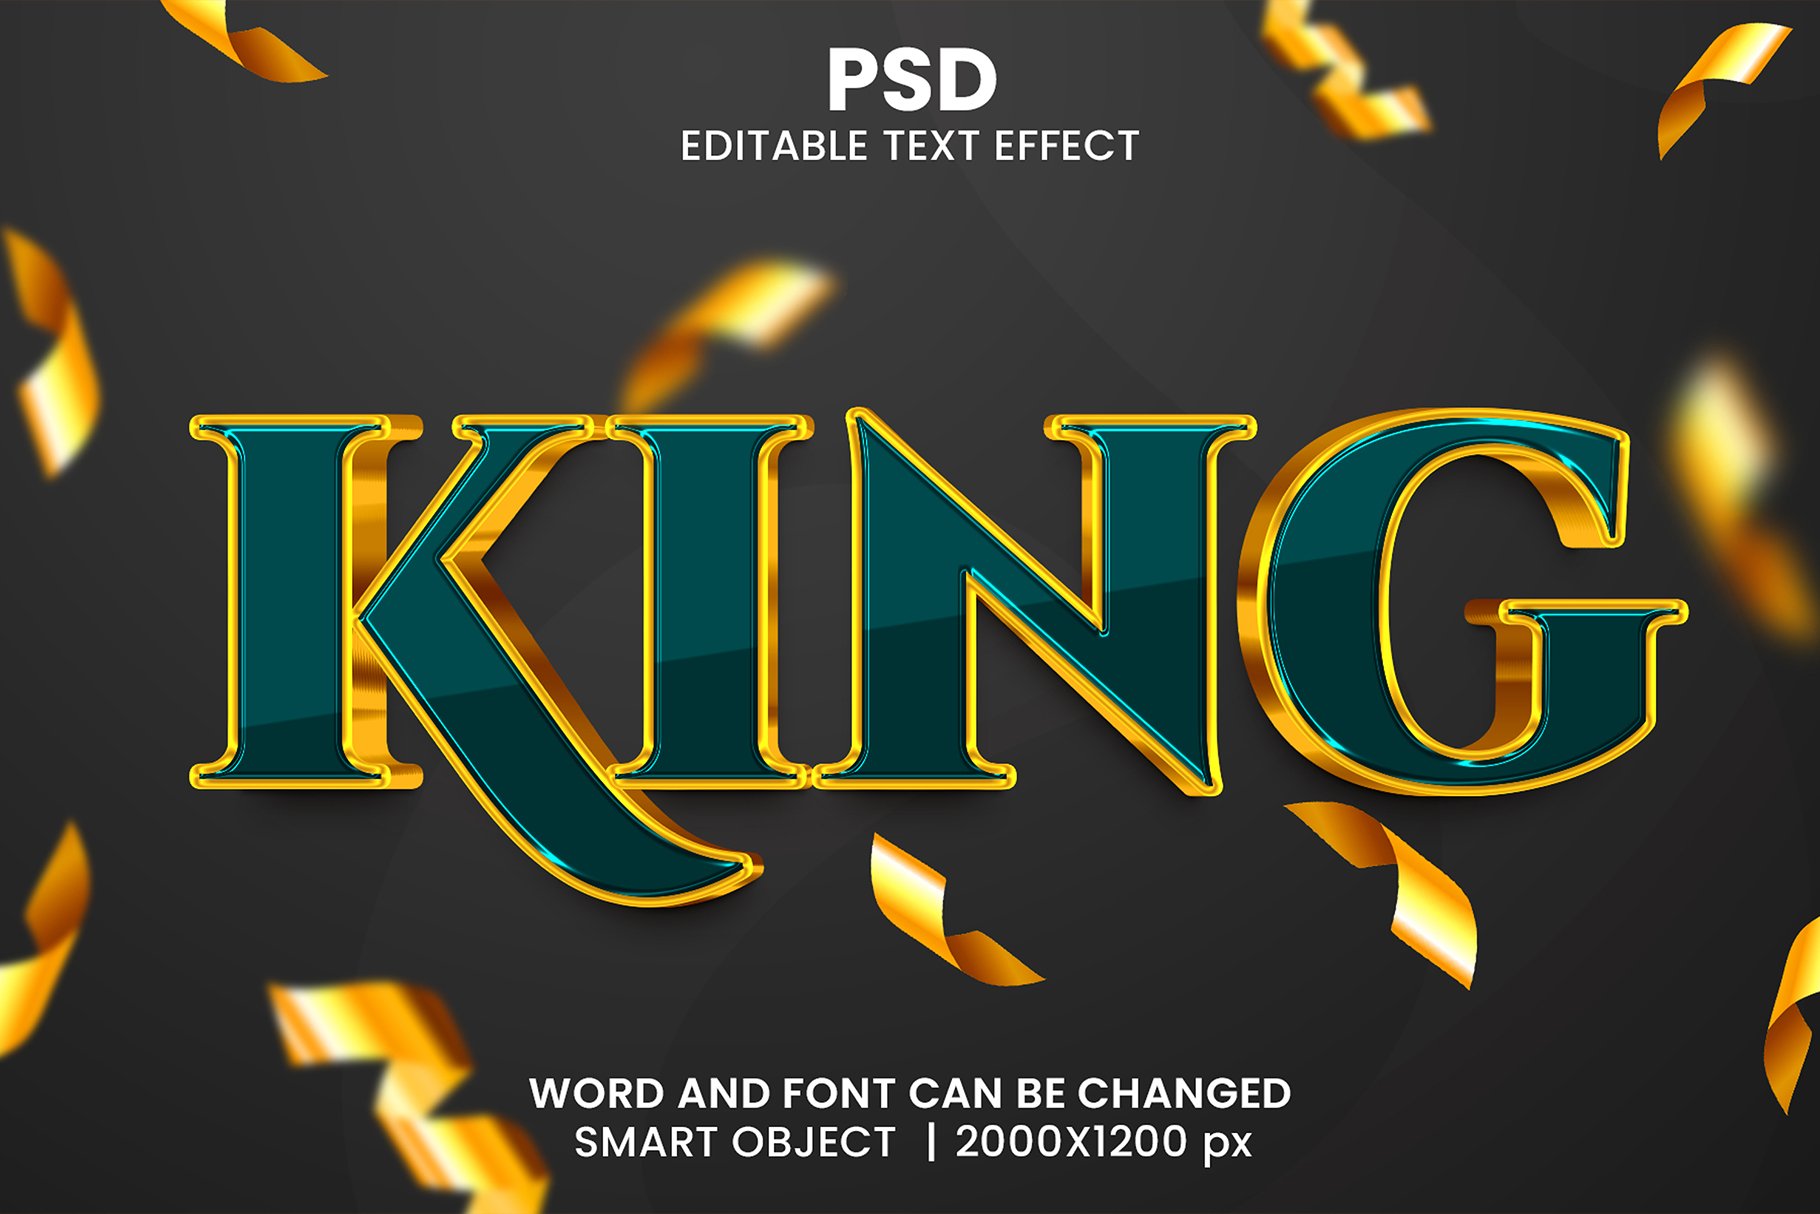 King Golden 3d Editable Text Effectcover image.